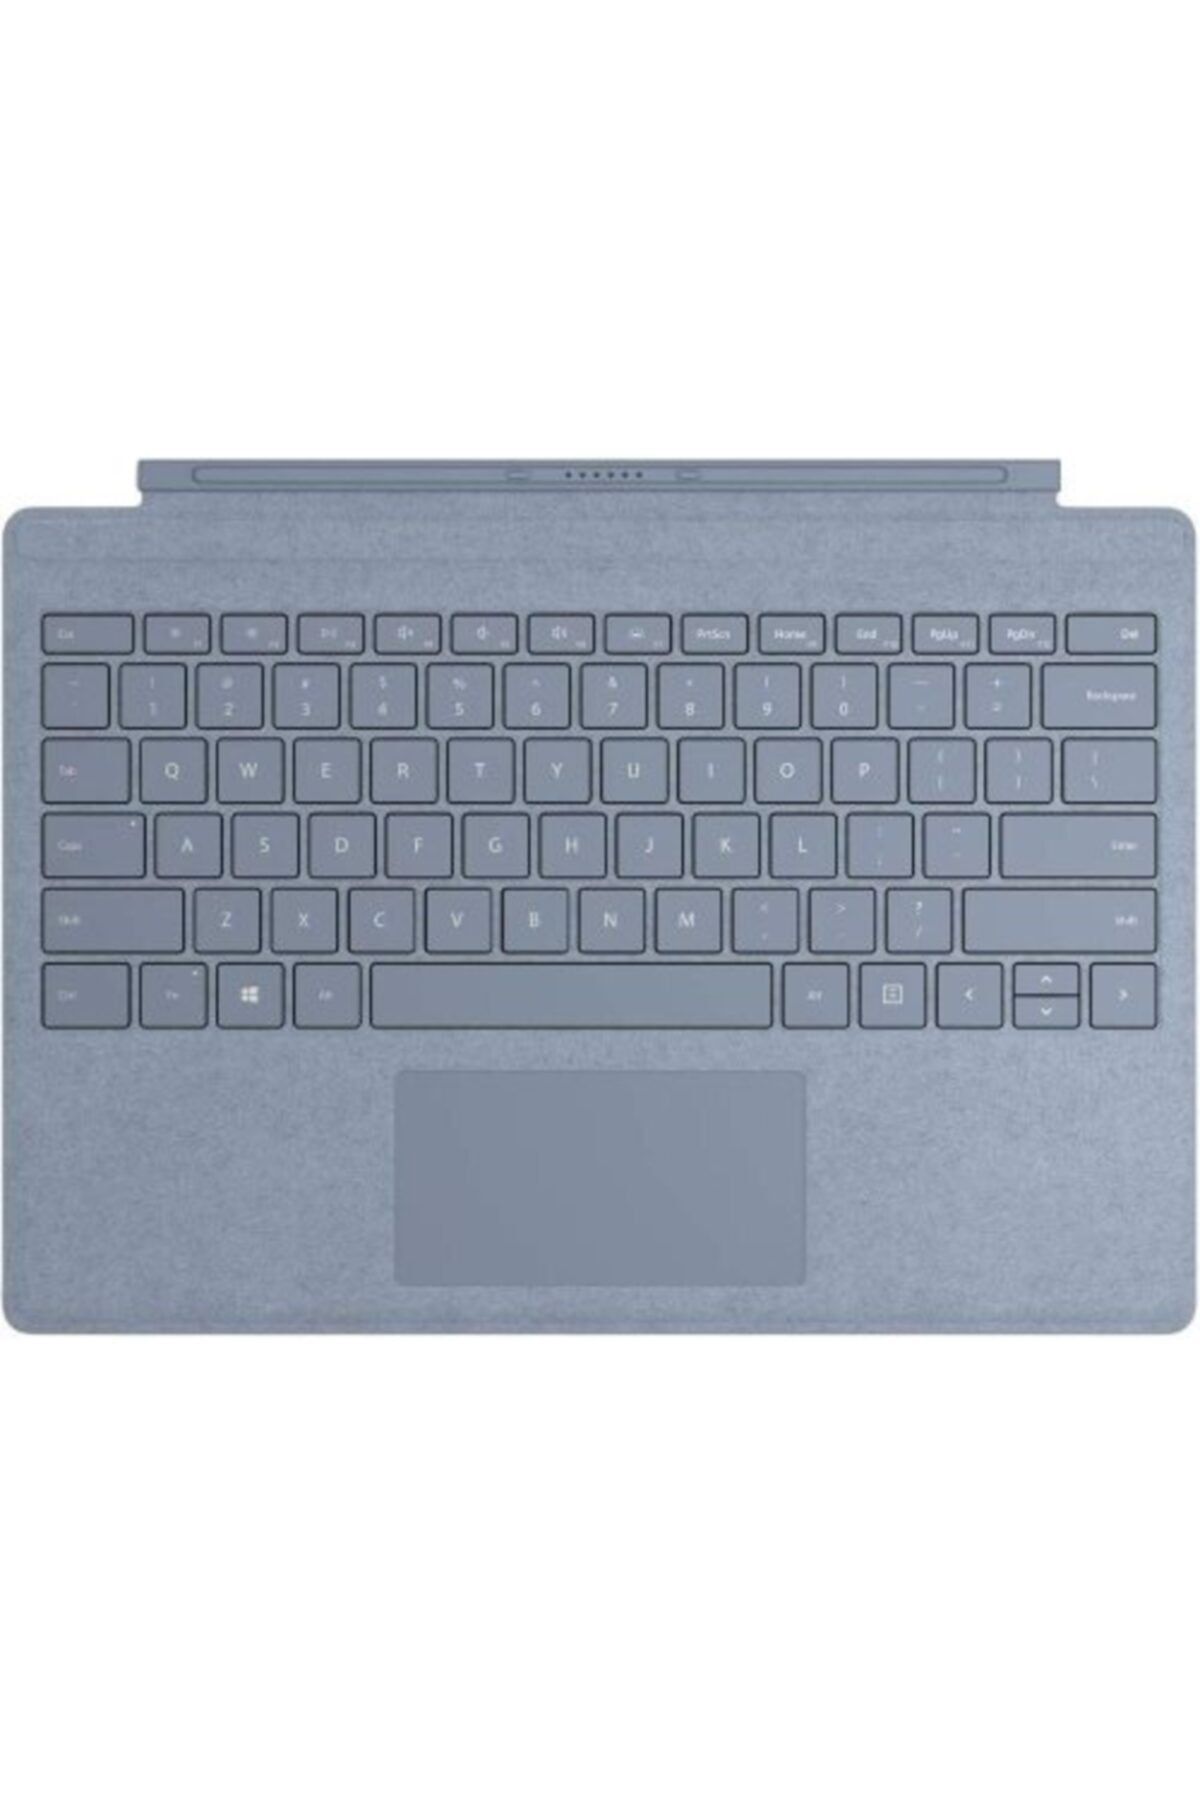 Microsoft T Surface Pro Tipi Ingilizce Klavye-aydınlatmalı-ffq-00121-orjinal-sıfır-lisanslı-buz Mavisi